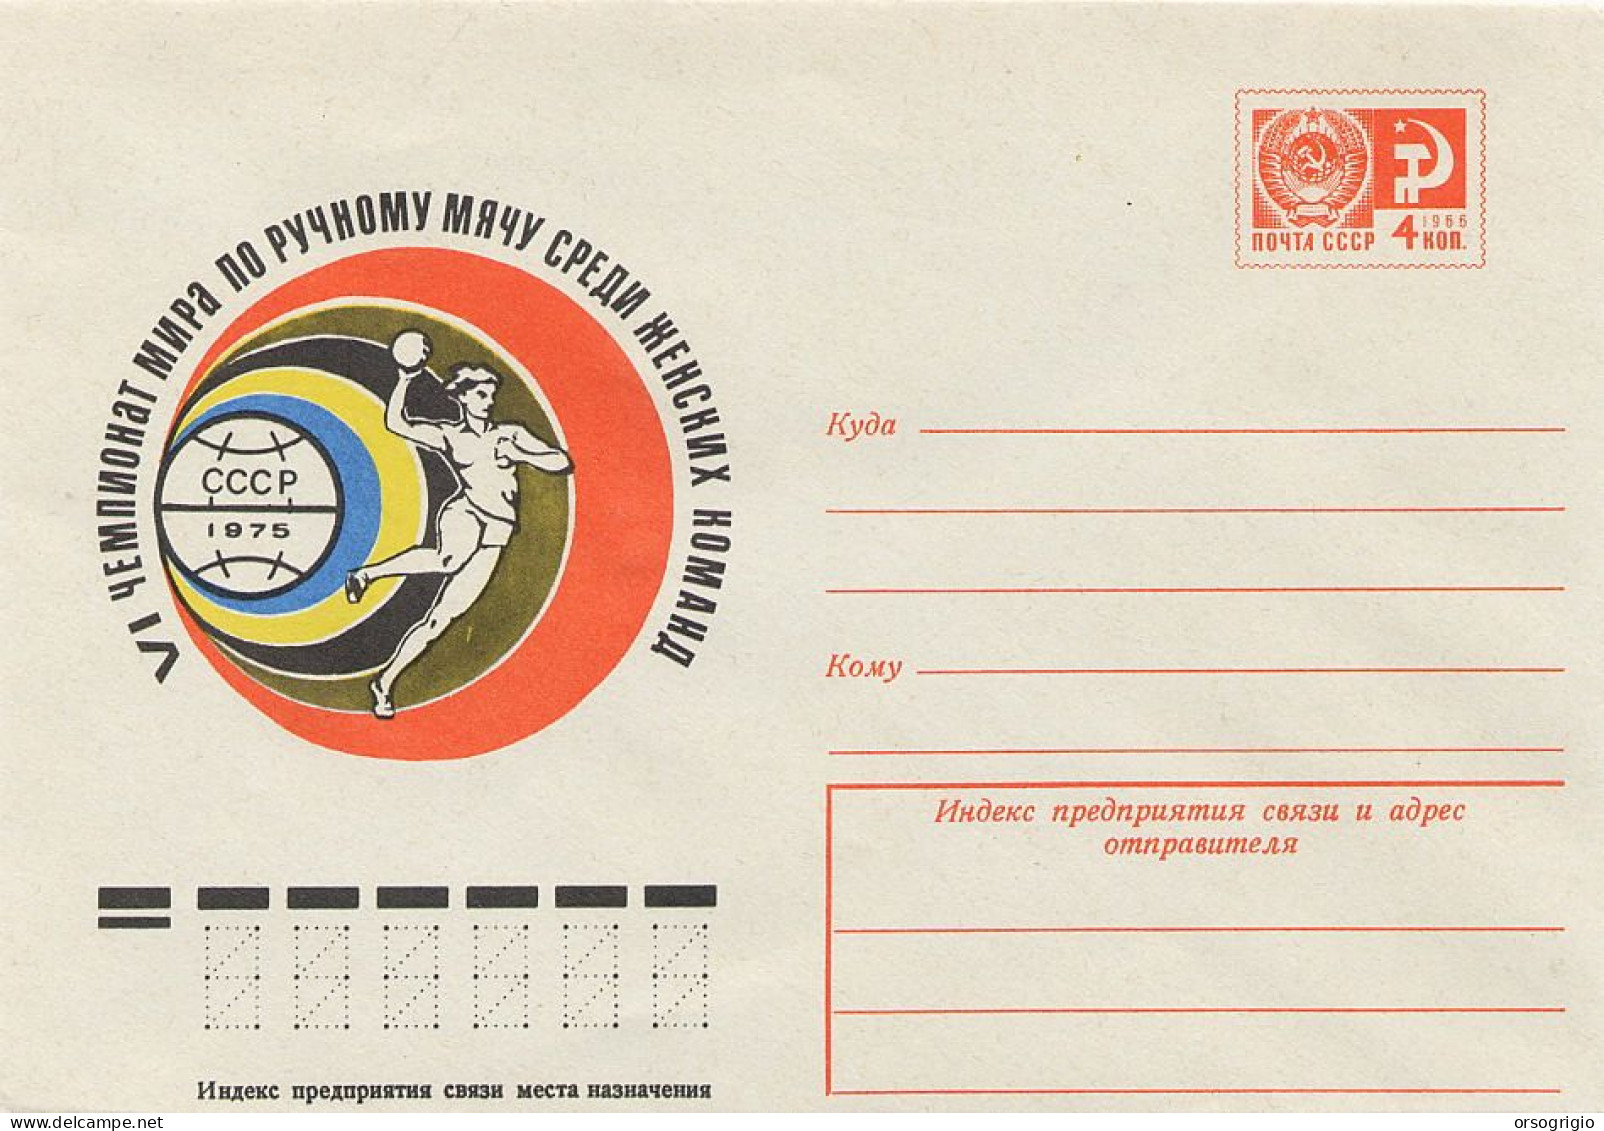 RUSSIA CCCP - 1975 - PALLAMANO - Handbal